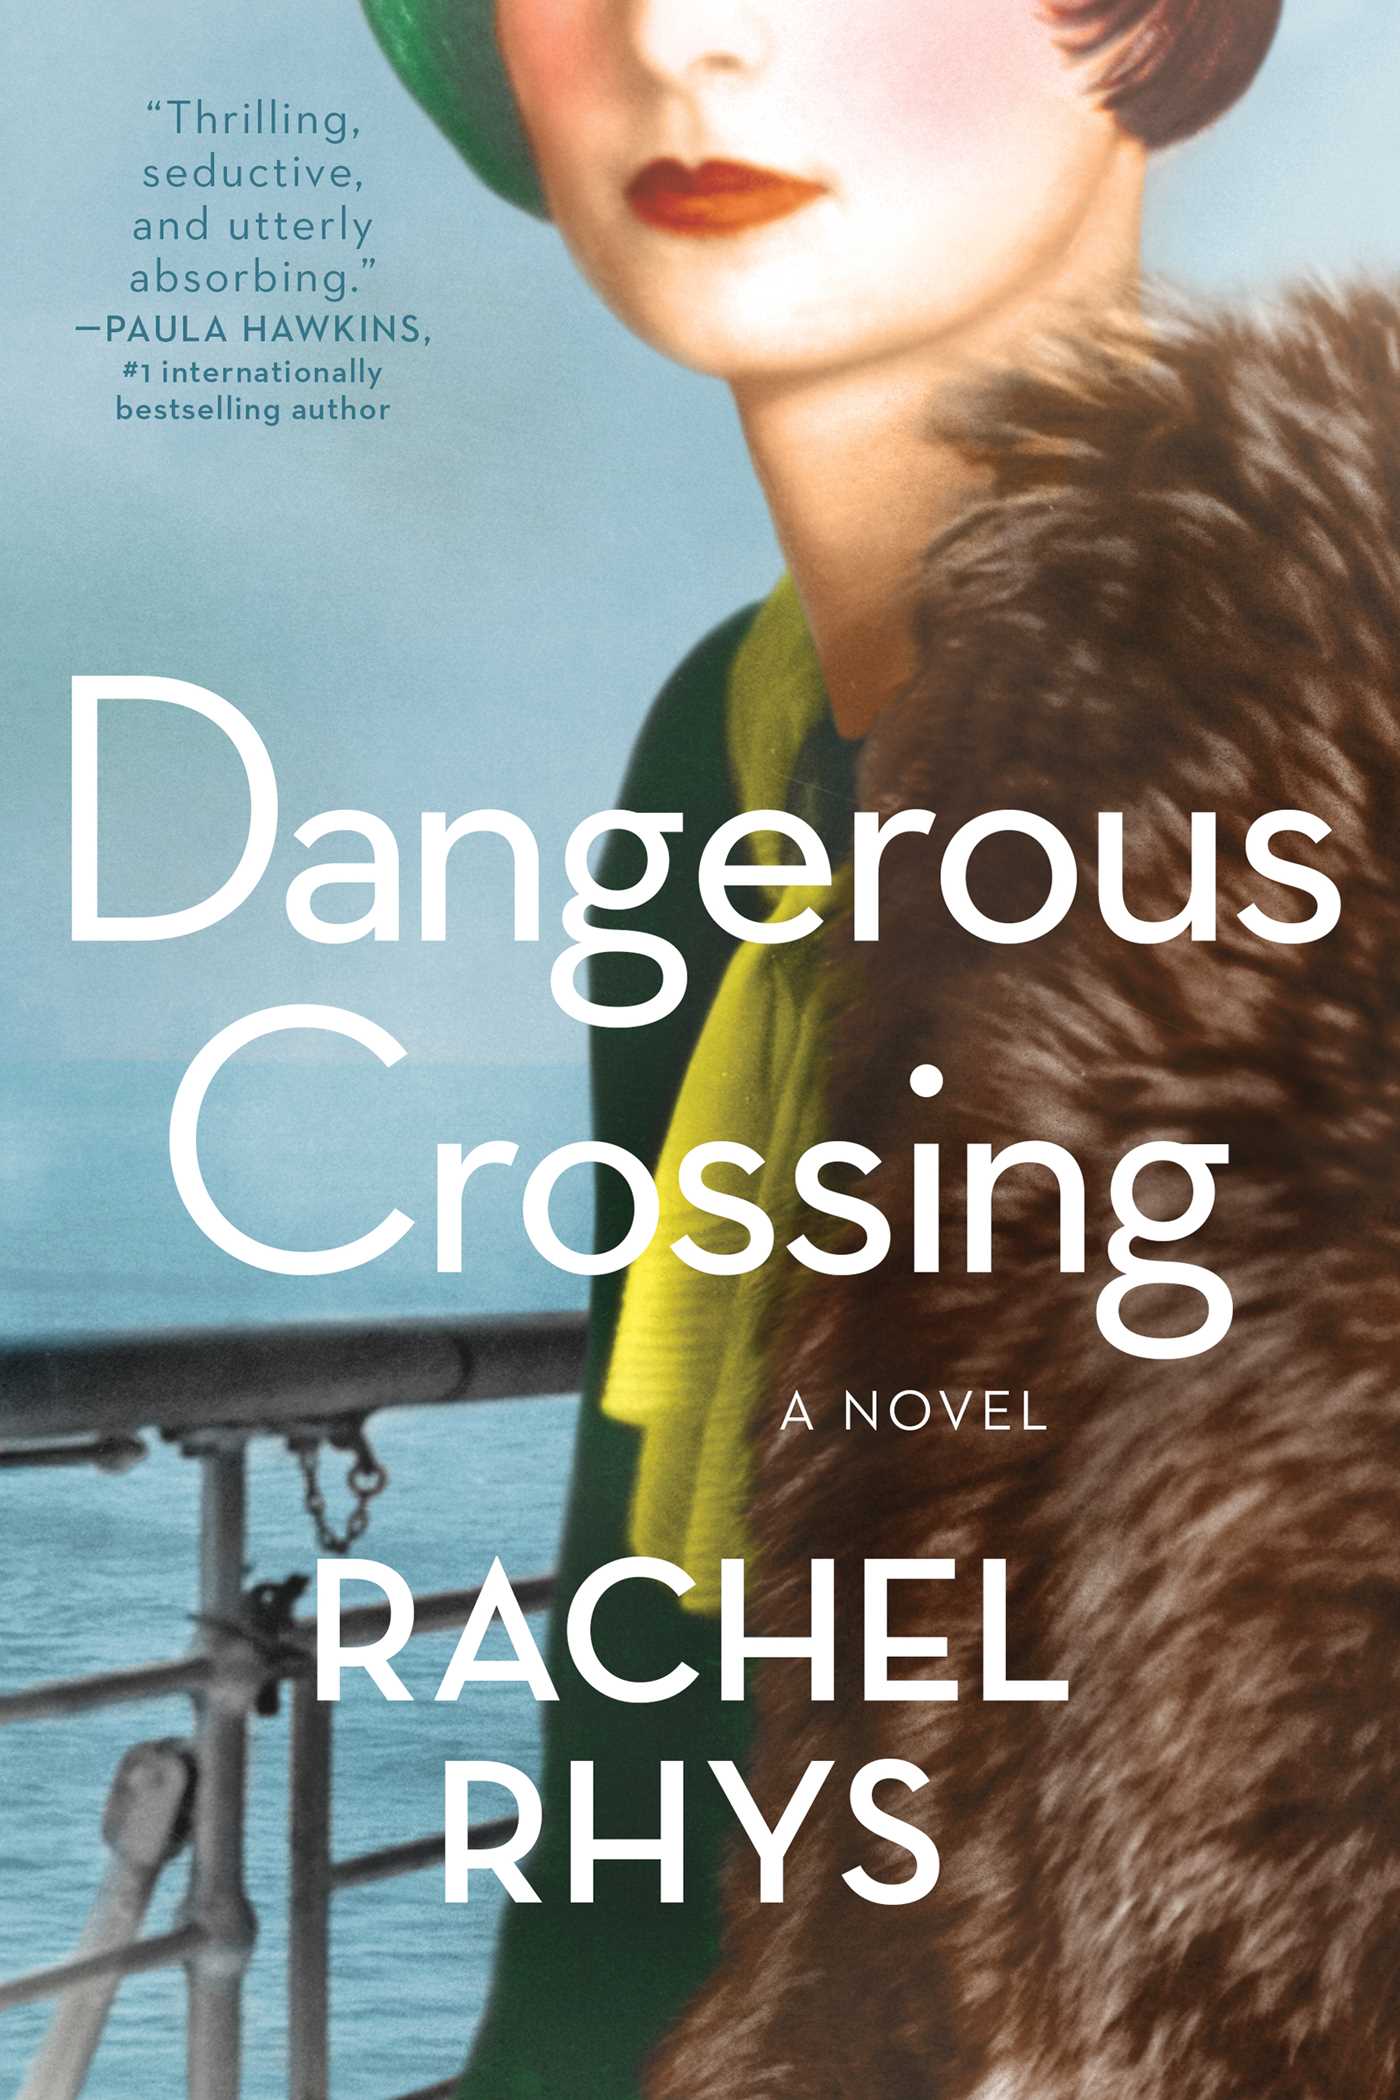 A dangerous crossing : a novel